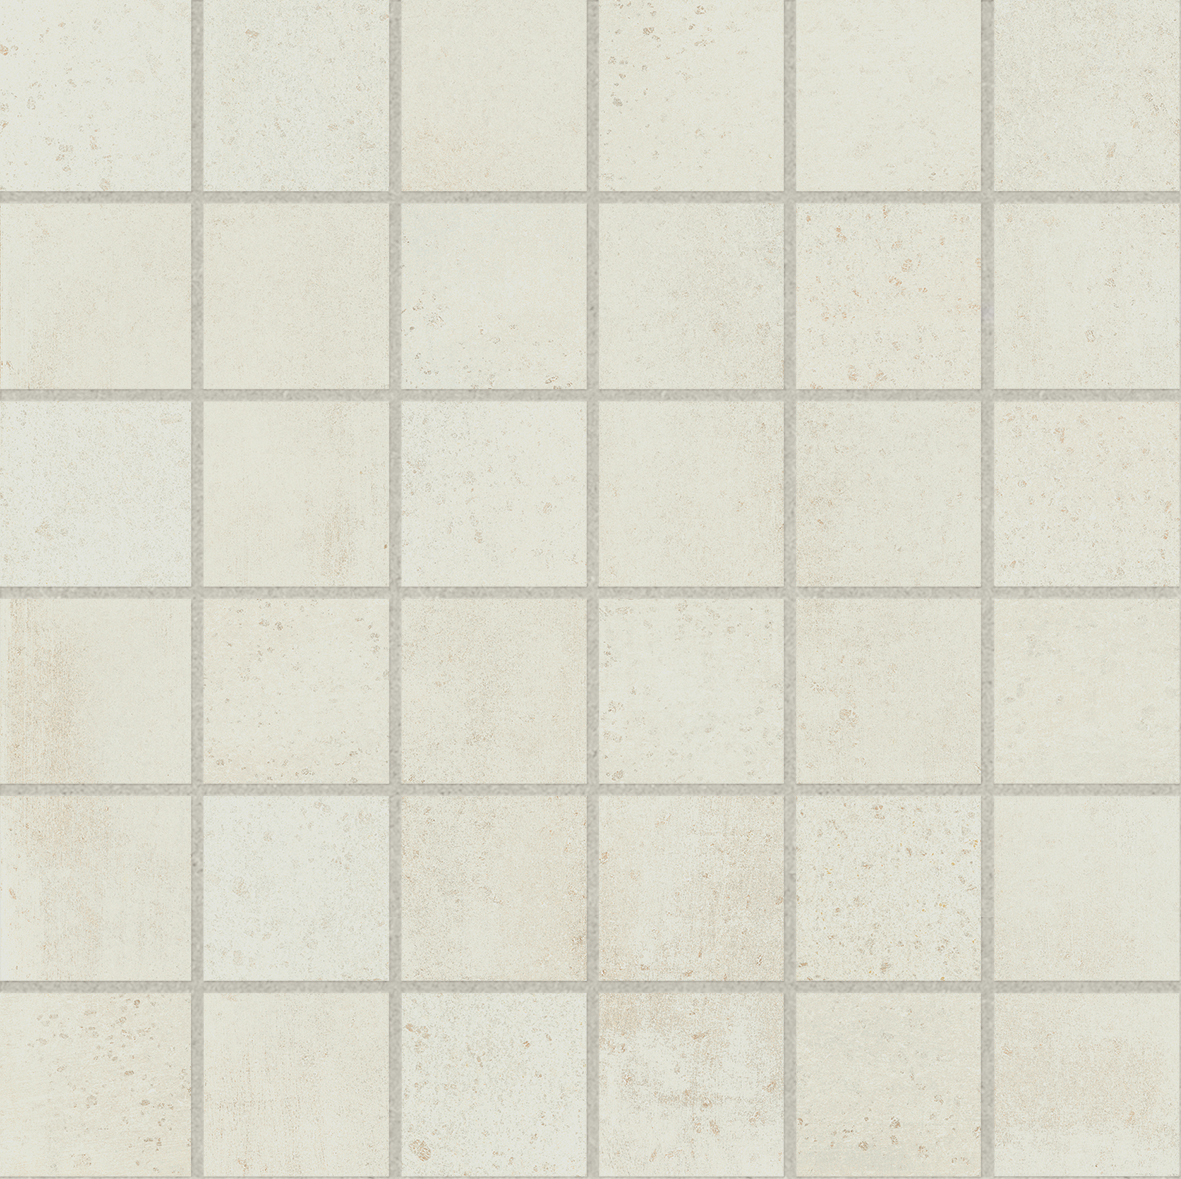 Marcacorona Stonecloud White Strutturato Mosaik Tessere F801 30x30cm 9mm